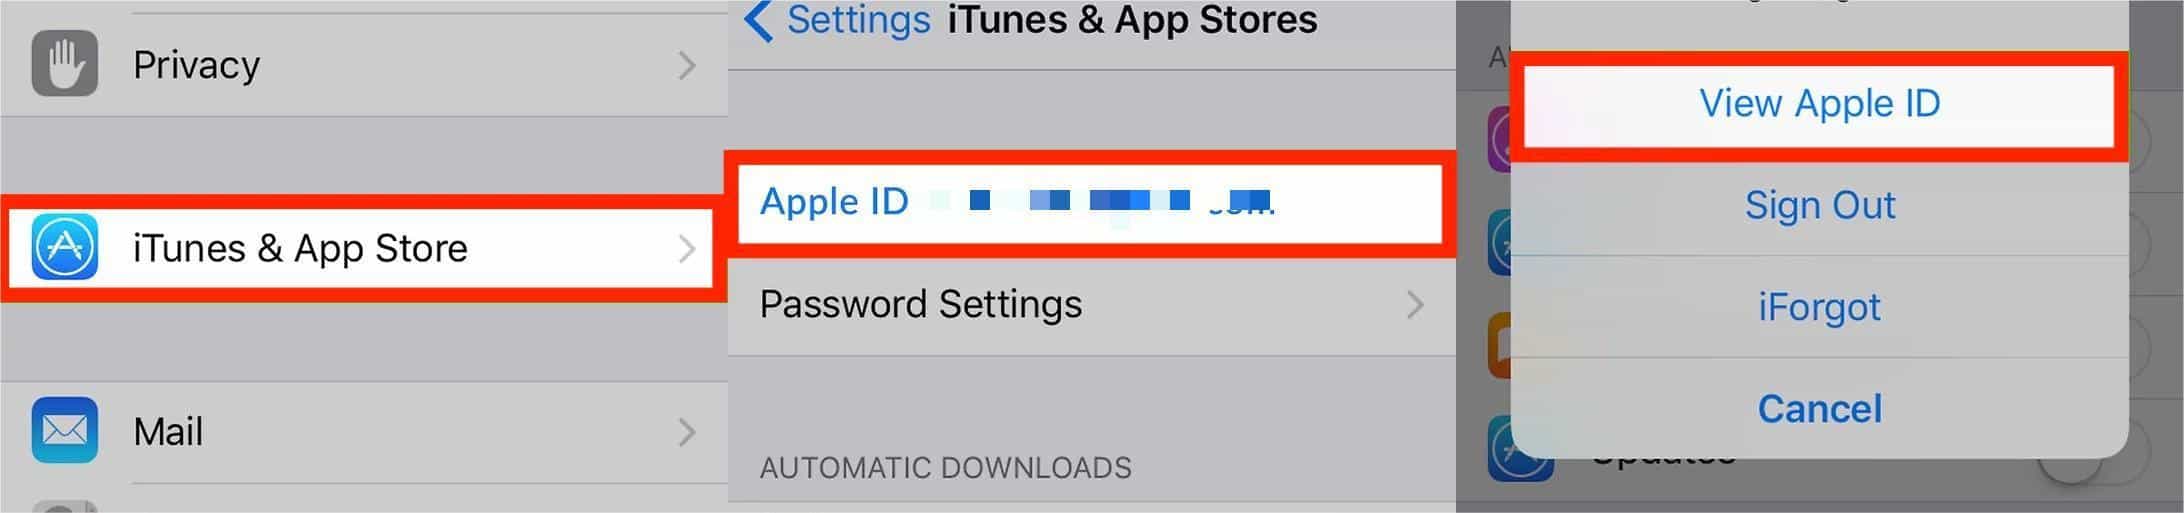 Toca Ver ID de Apple